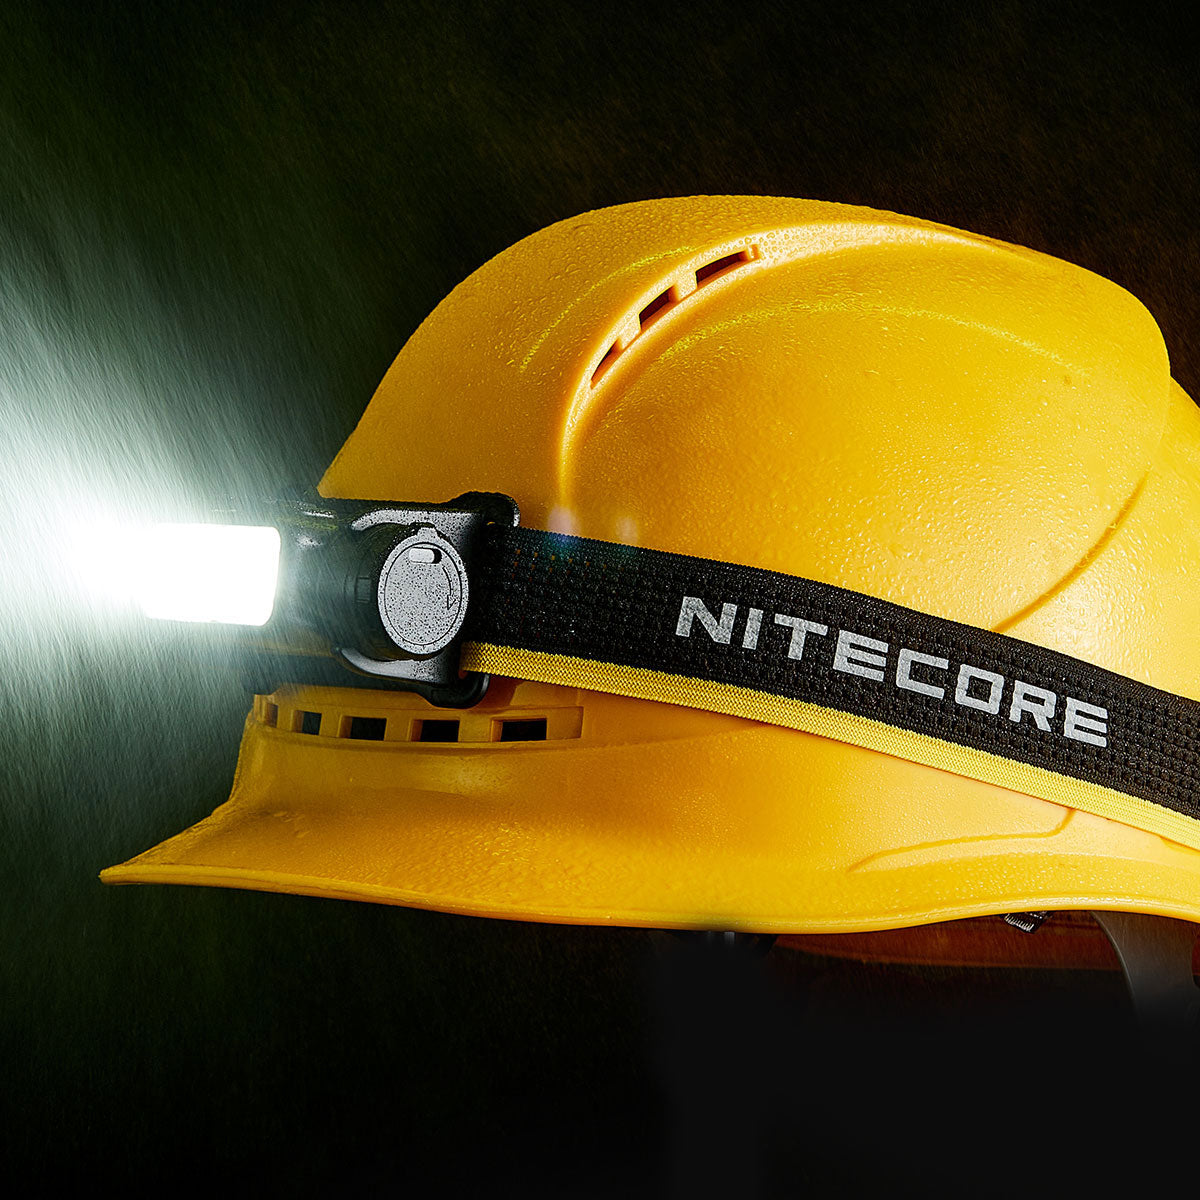 Nitecore NU53 Spotlight + Floodlight Rechargeable Headlamp (1800 Lumens)